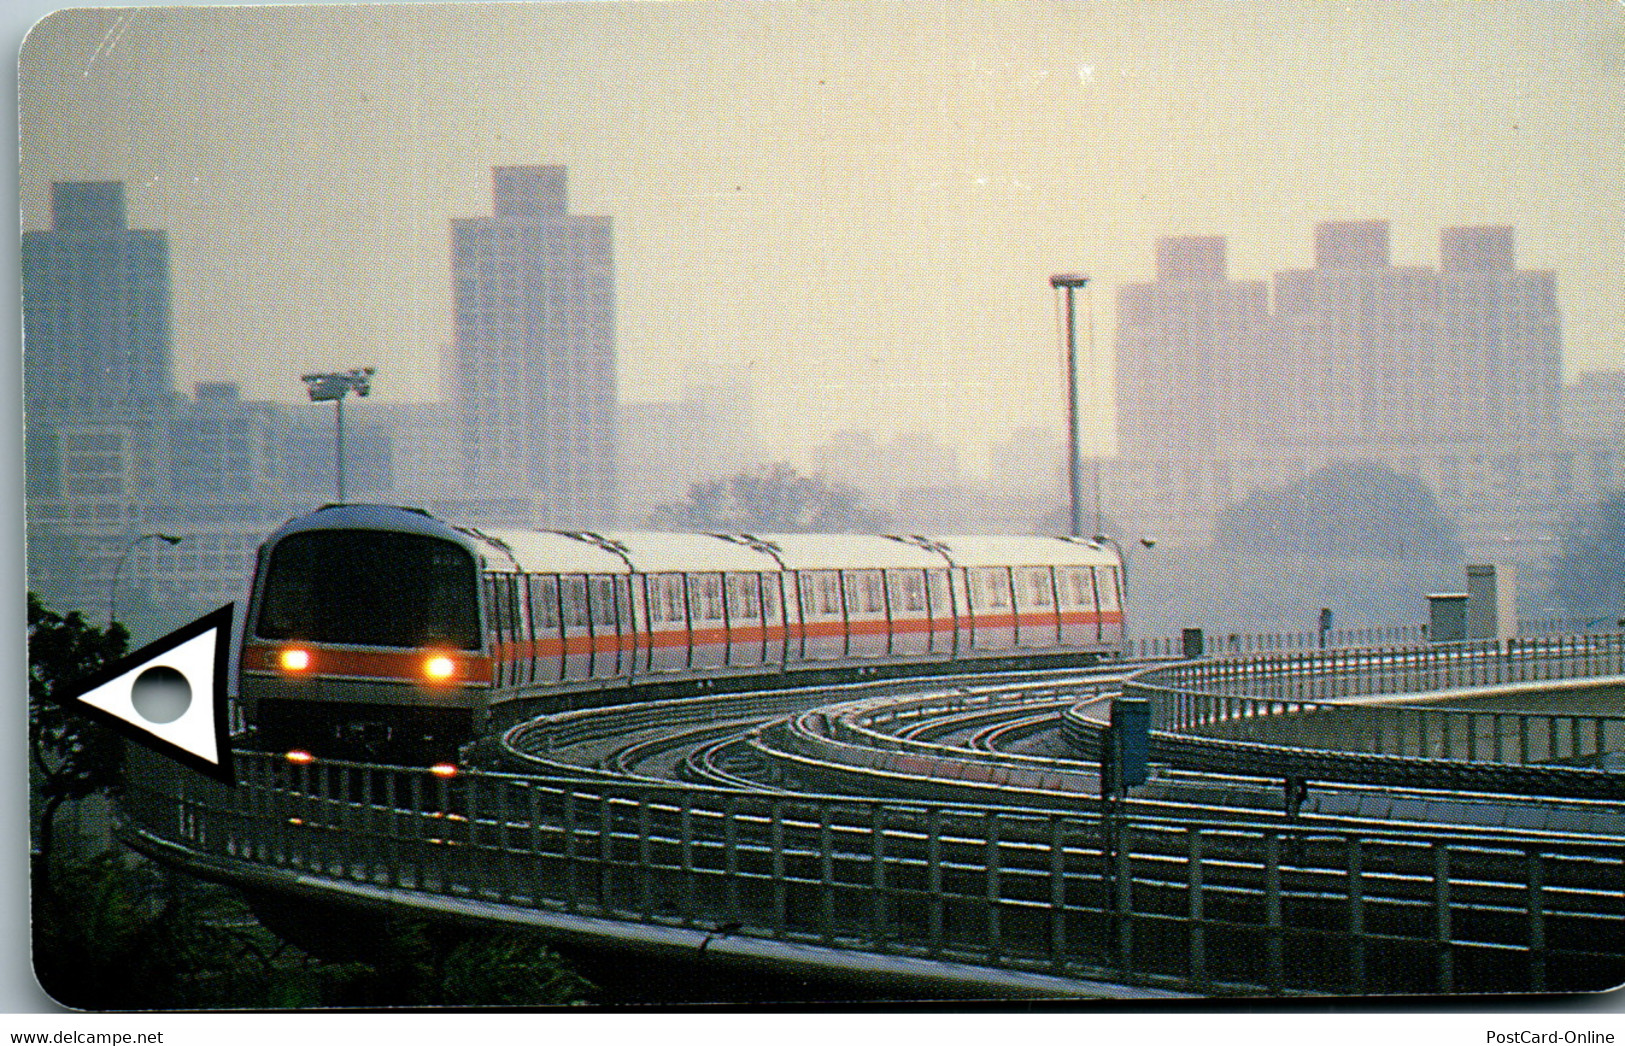 25014 - Singapur - Smart Single Trip , Singapore MRT Ltd , Mass Rapid Transit - World